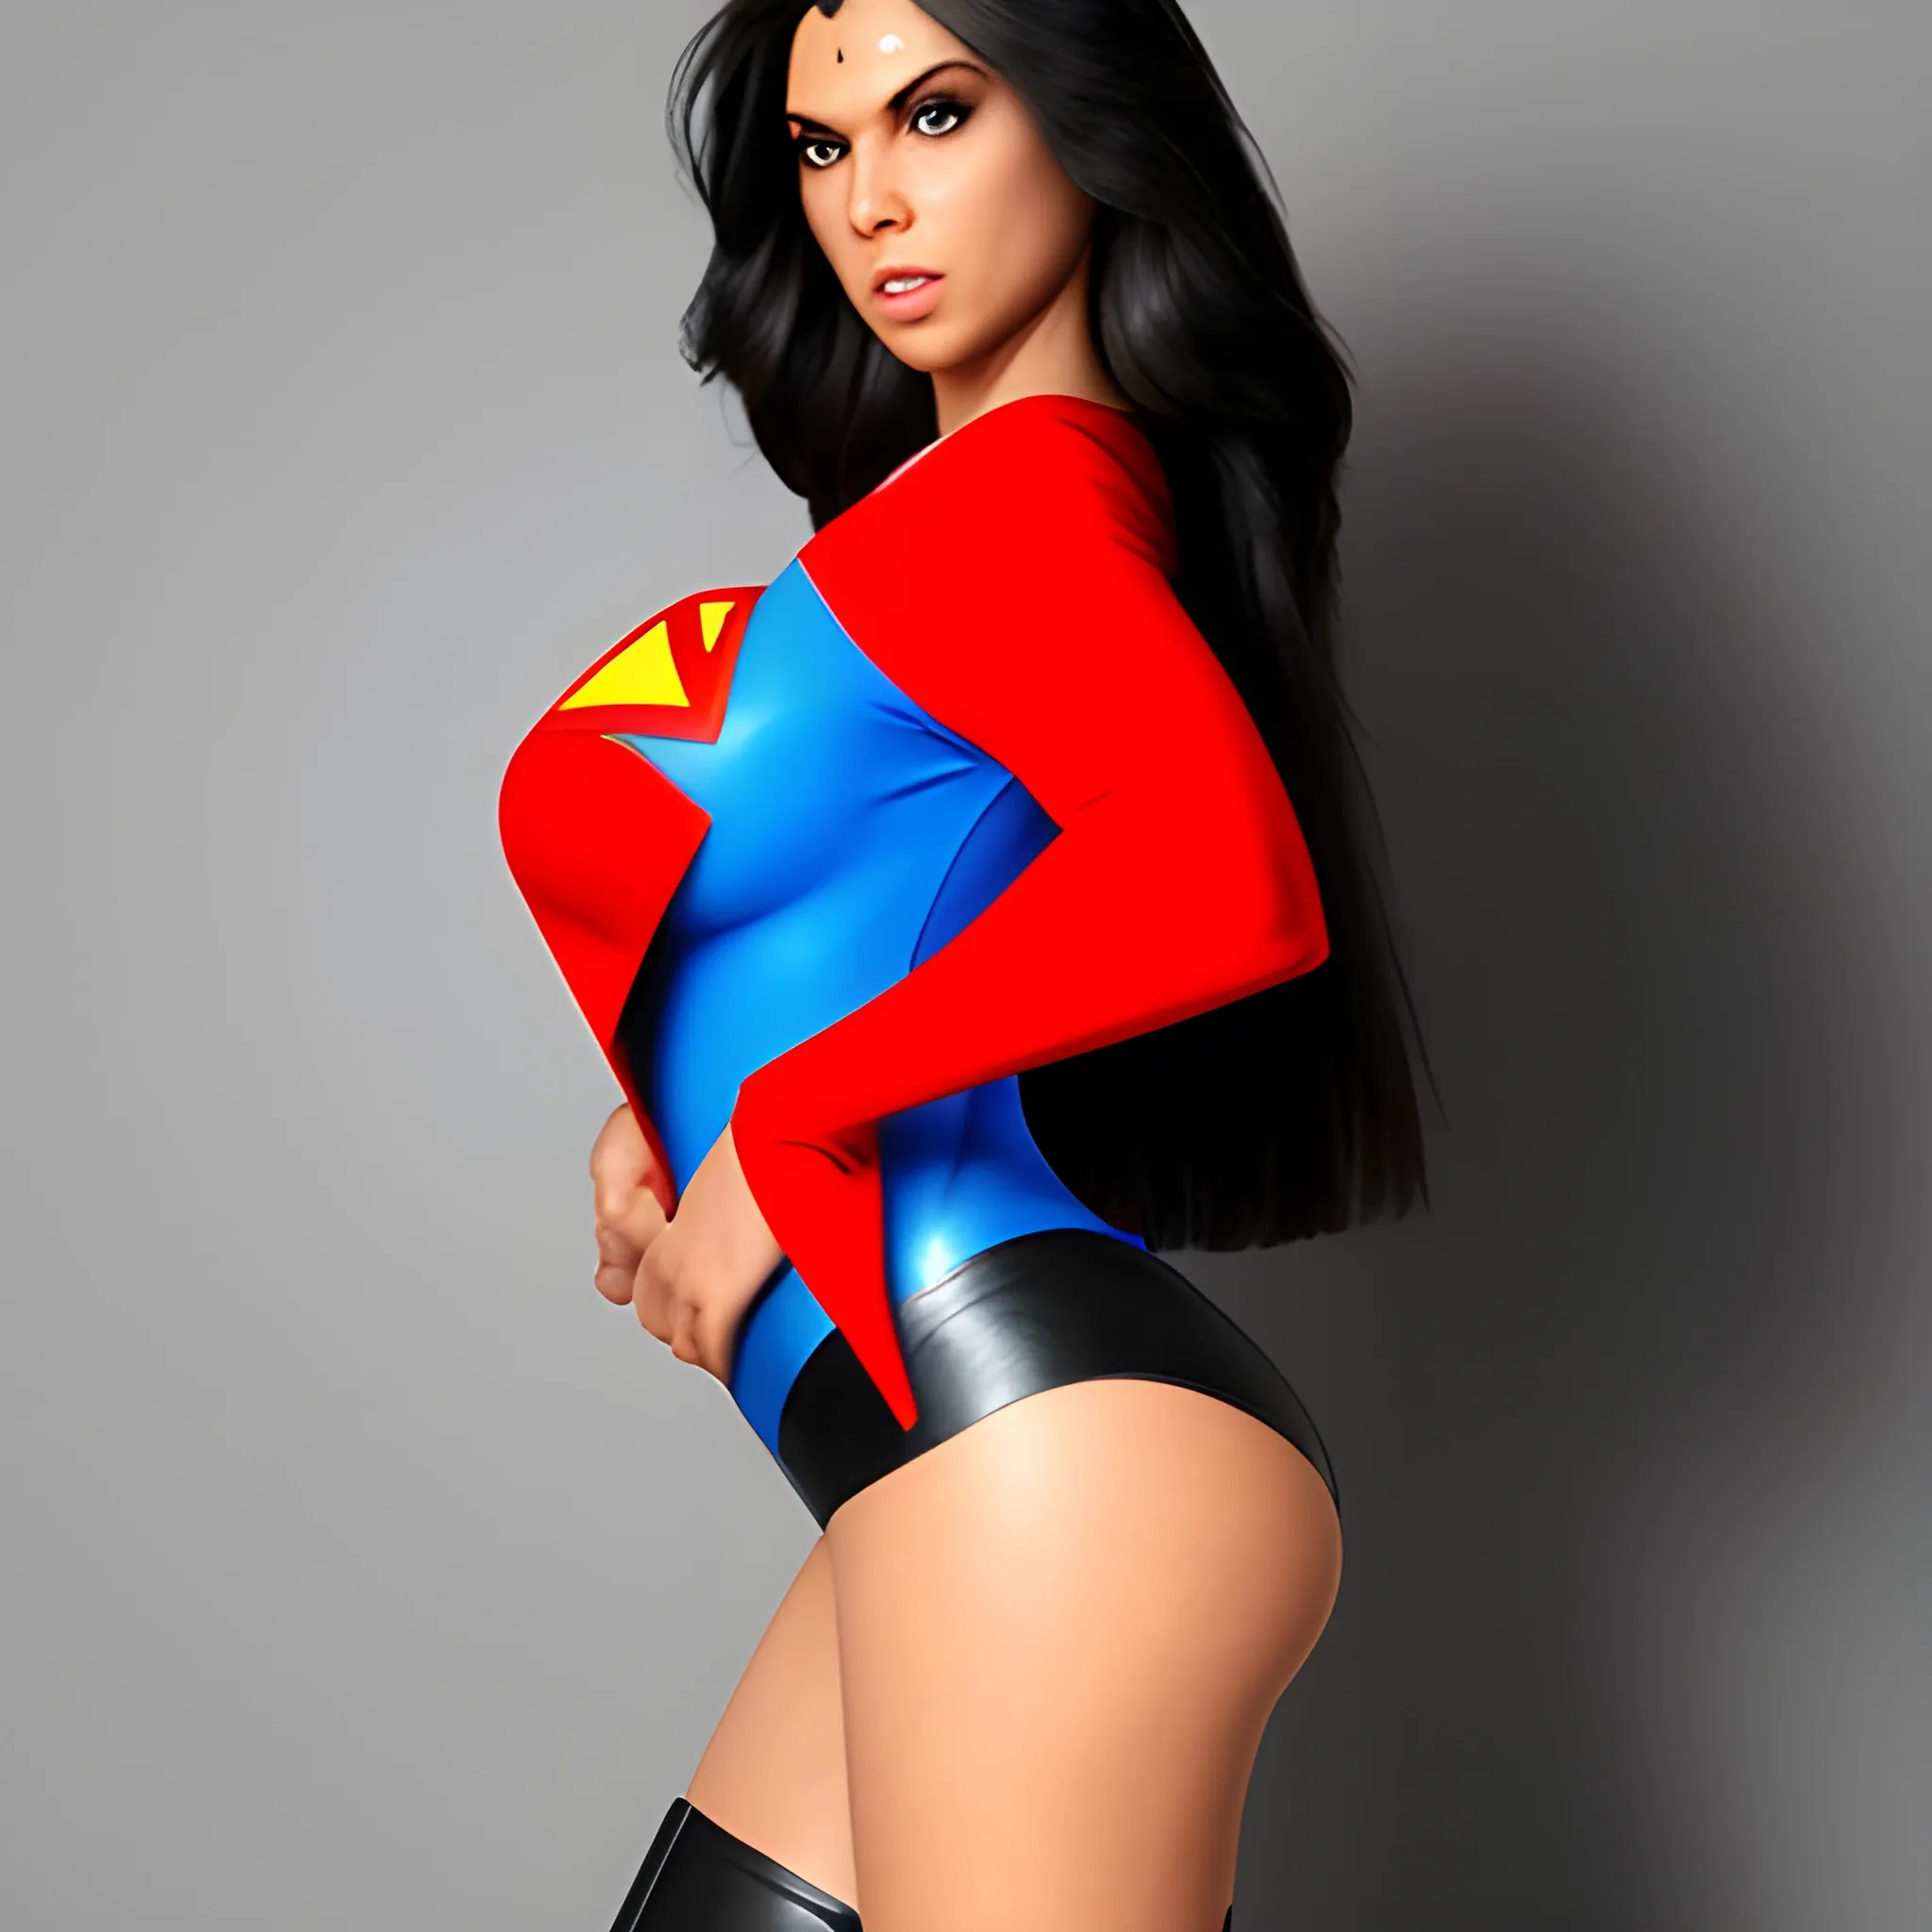 superwoman revealing clothing side shot full body shot